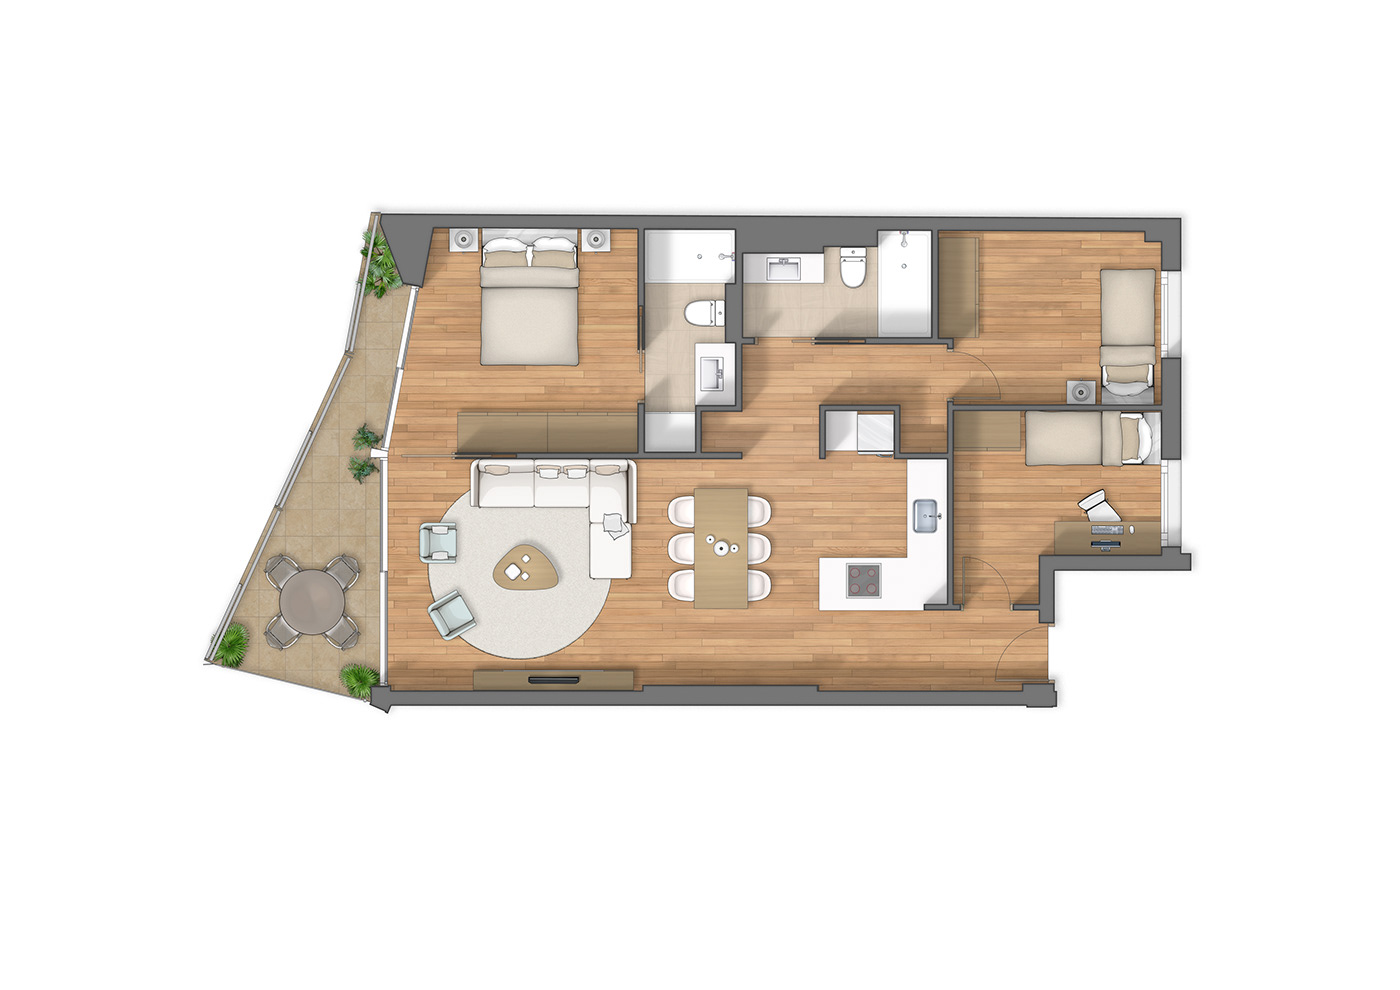 2D floor plan floorplan plan coupe plan d´étage plan de vente plano planta humanizada real estate rendering